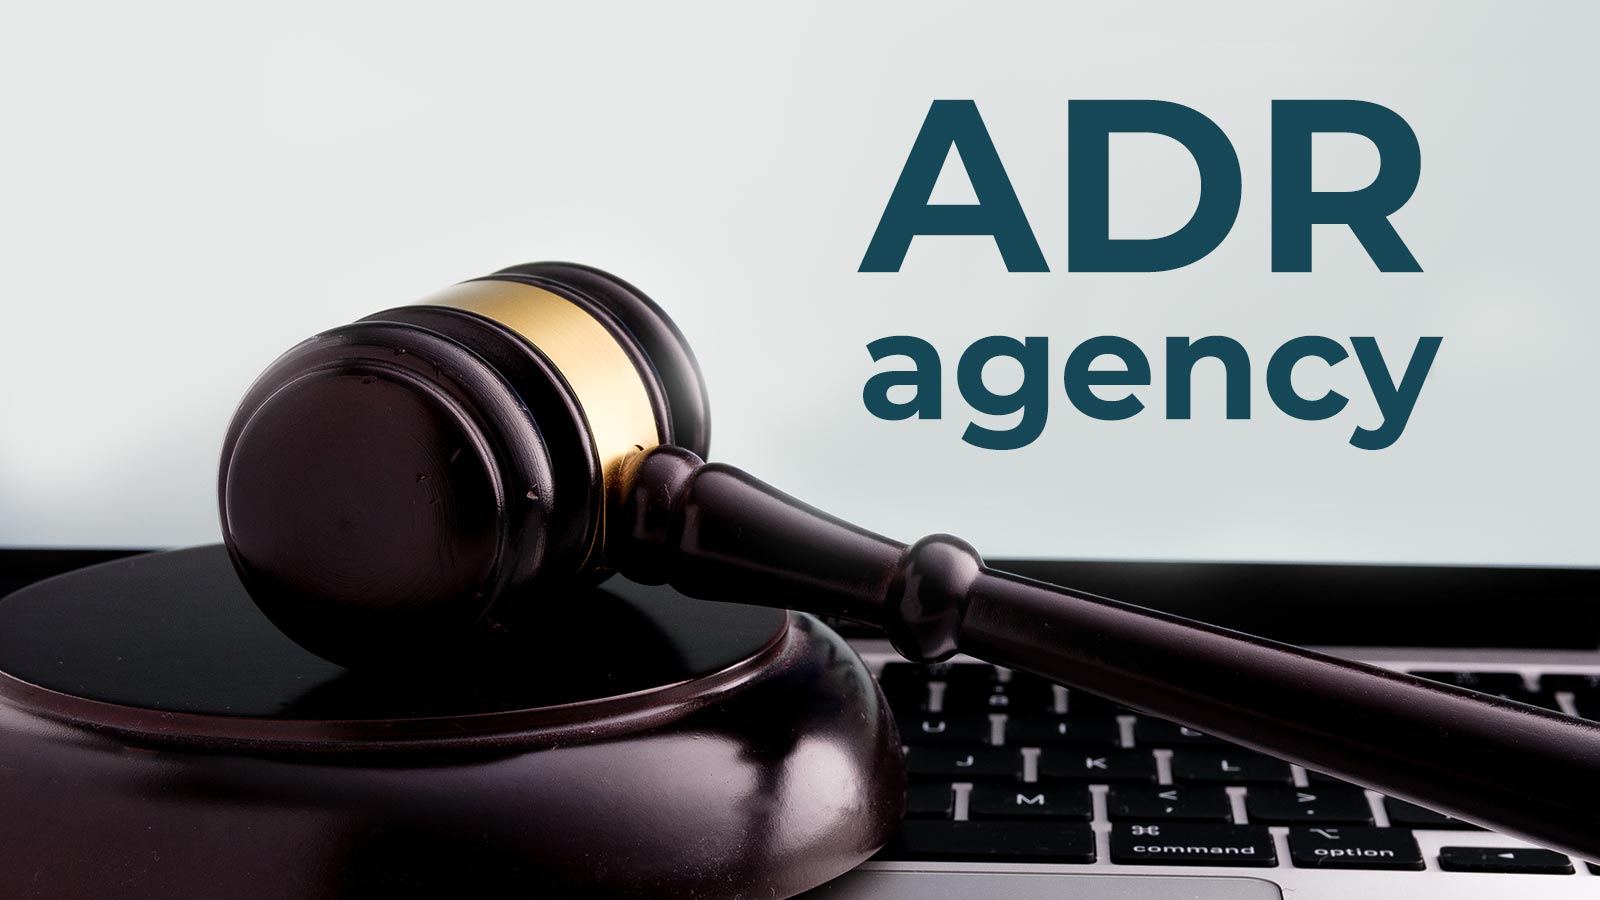 Contact an ADR agency